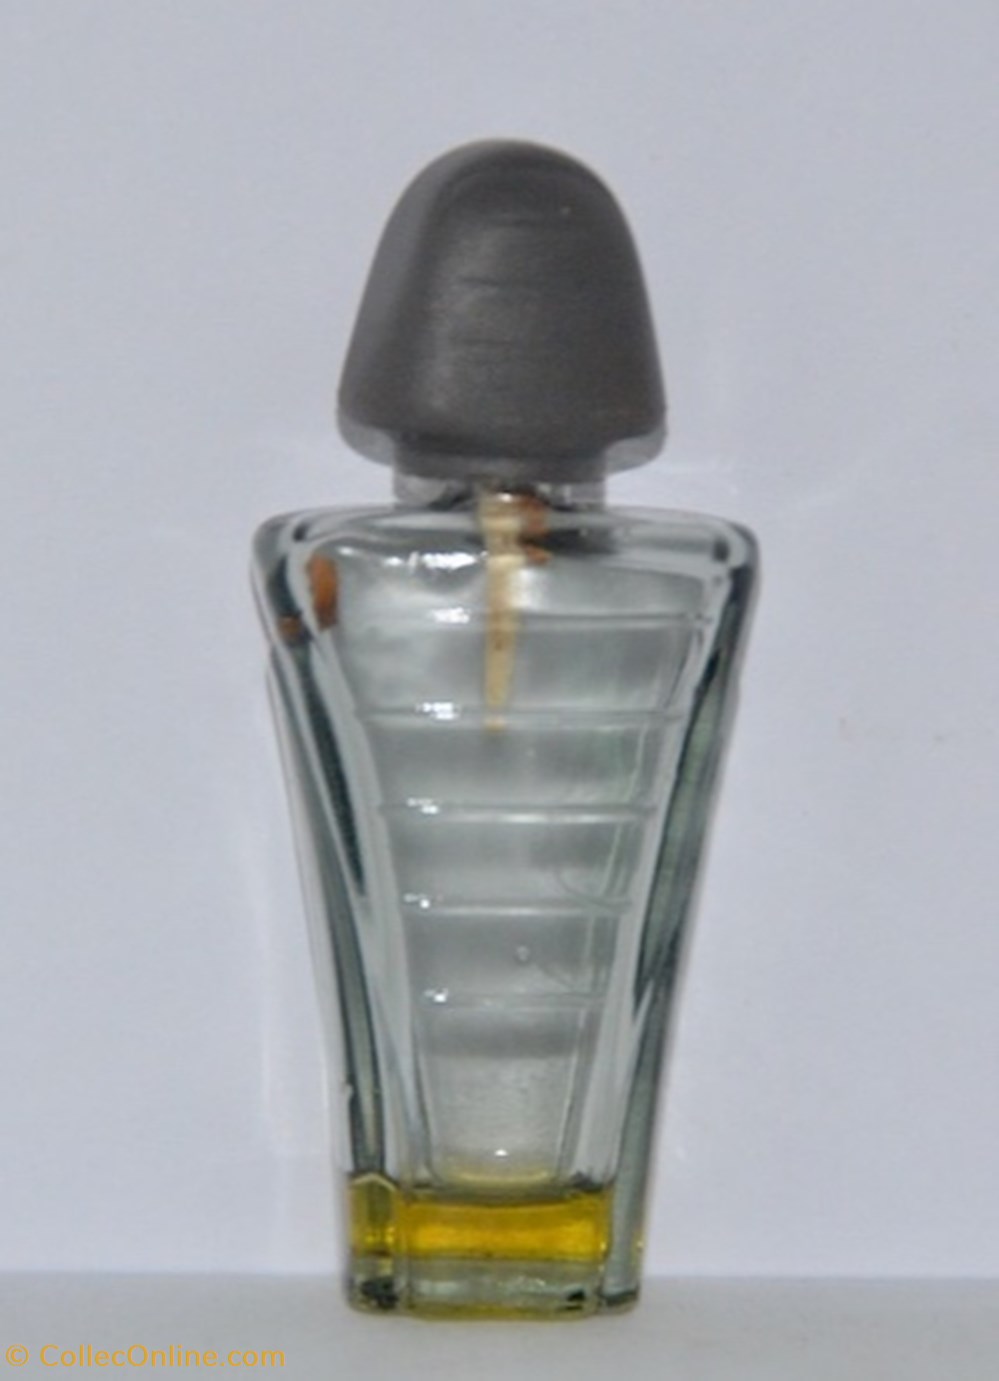 CANTUEL Gilles - Alamo - Perfumes and Beauty - Fragrances - Capacity 5 ml